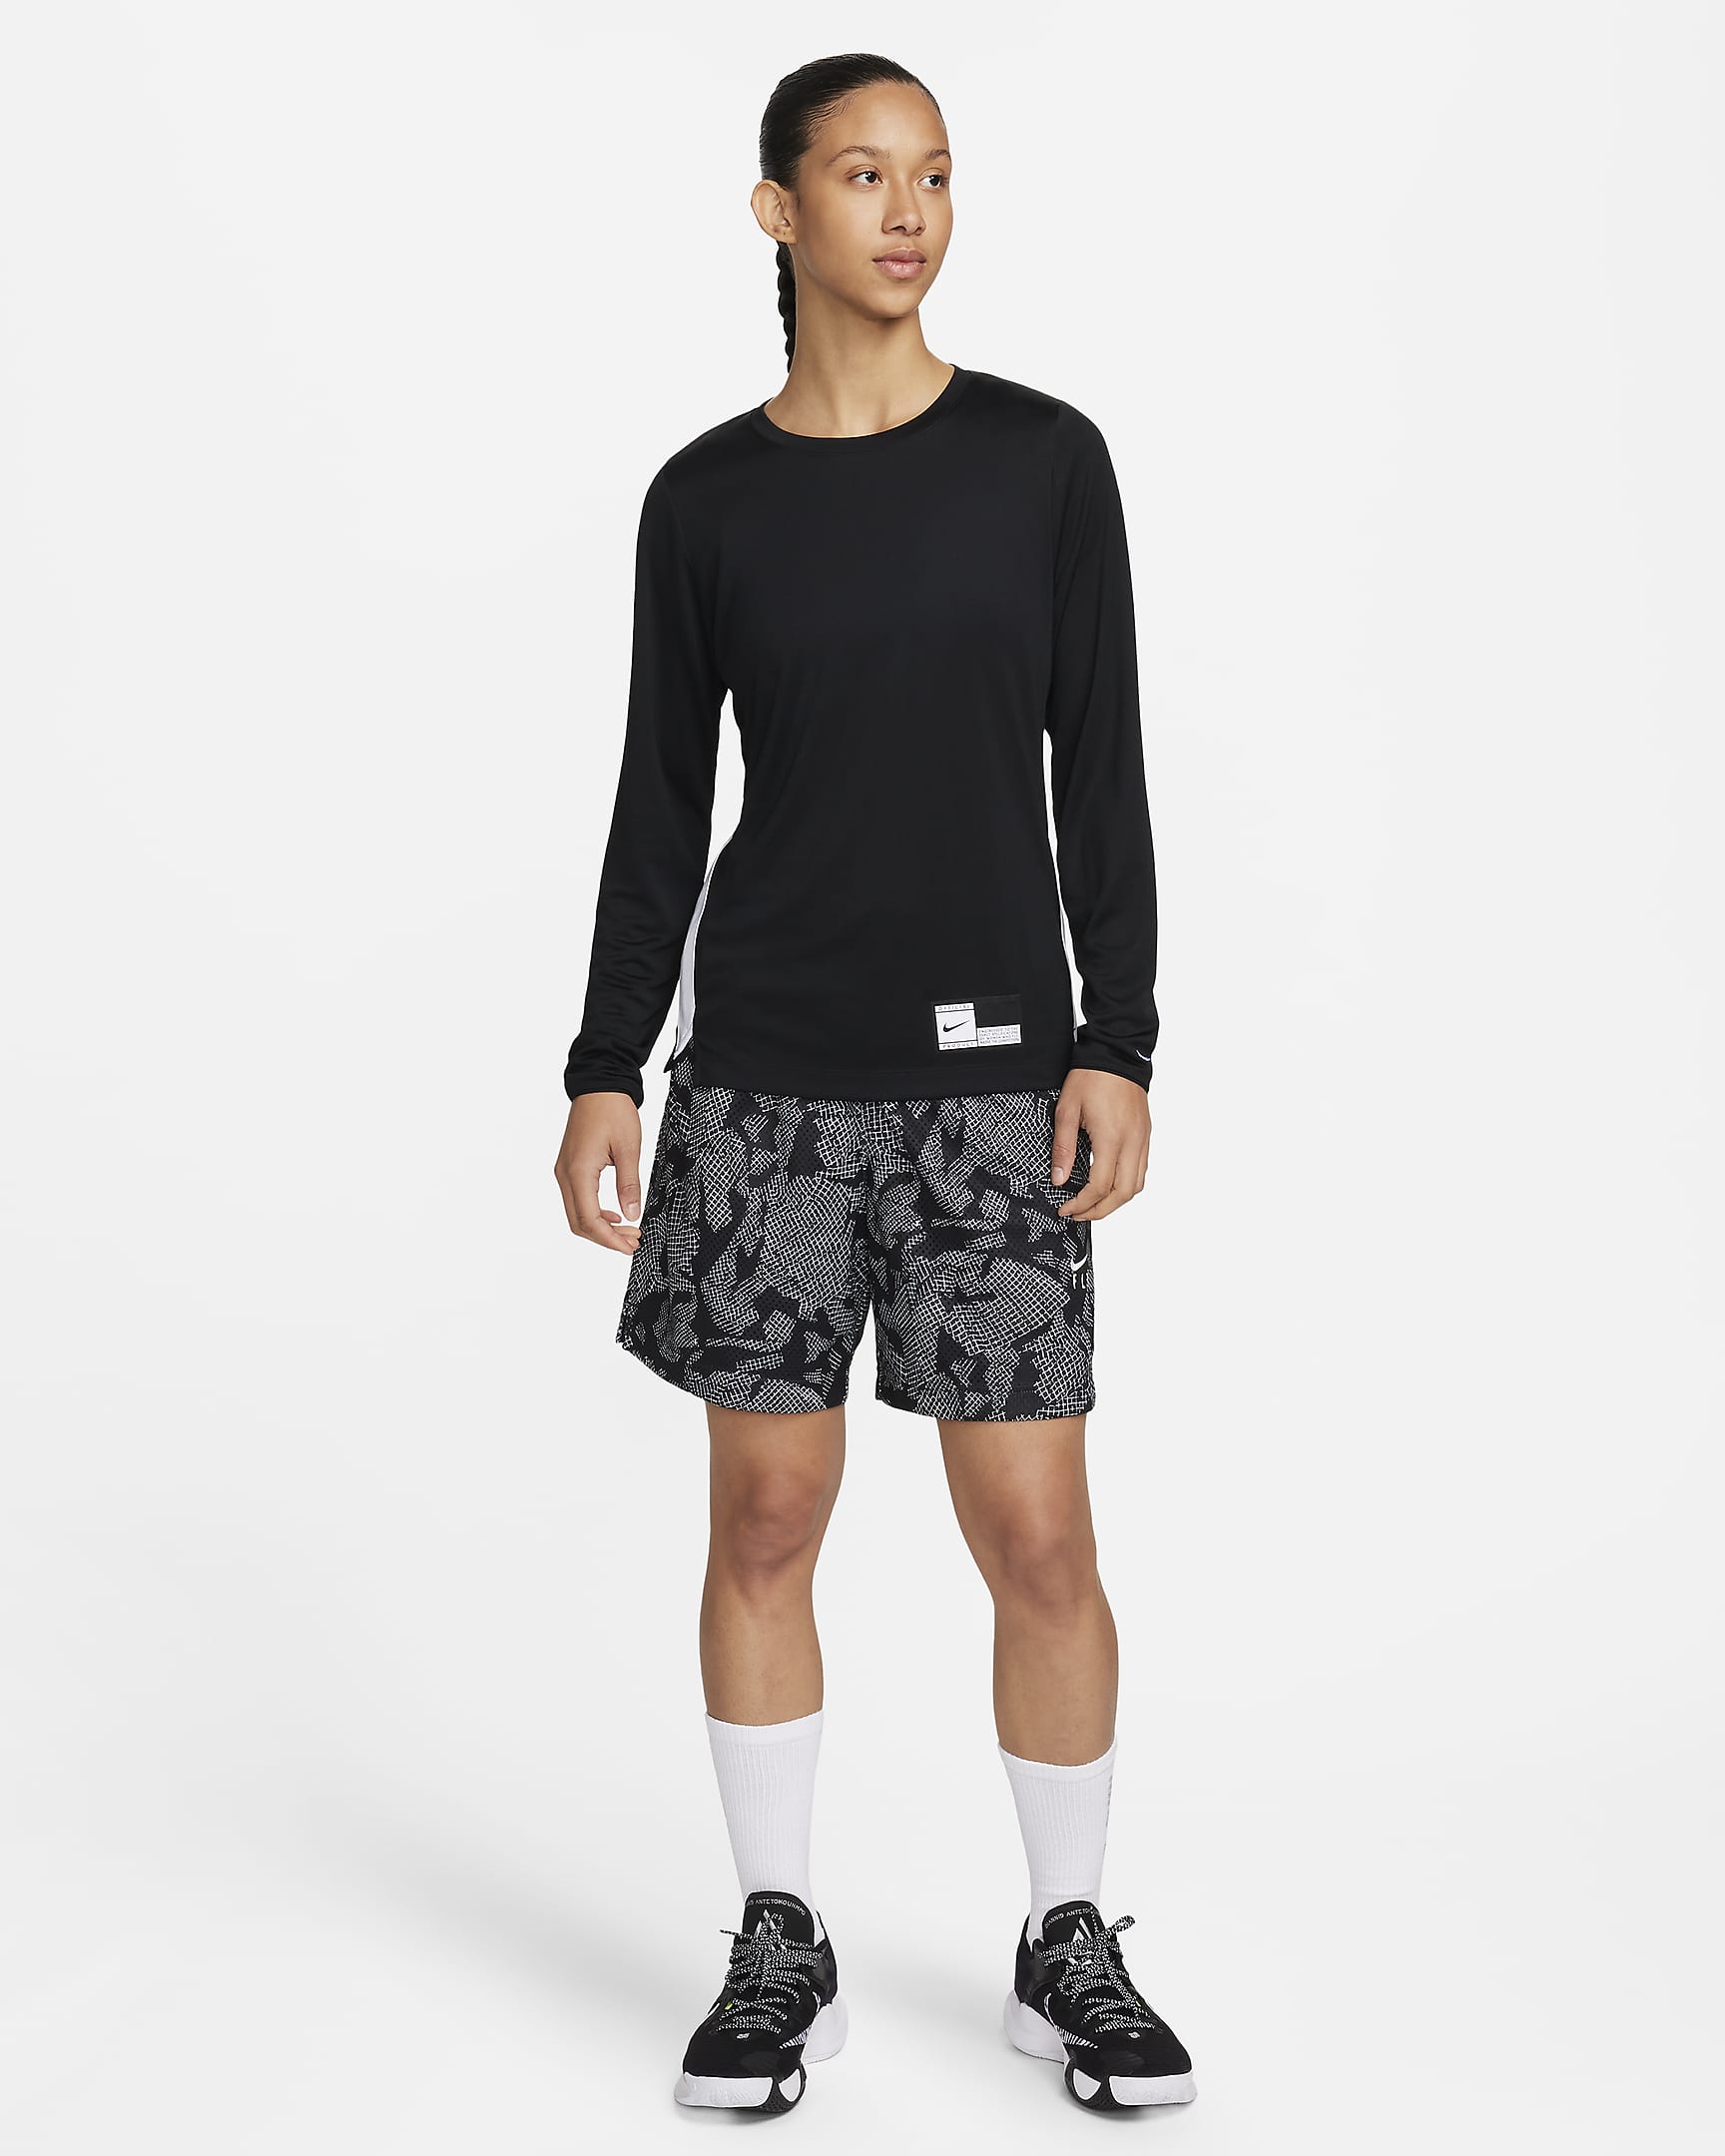 Nike Women's Dri-FIT Long-Sleeve Warm-Up Basketball Top. Nike SK